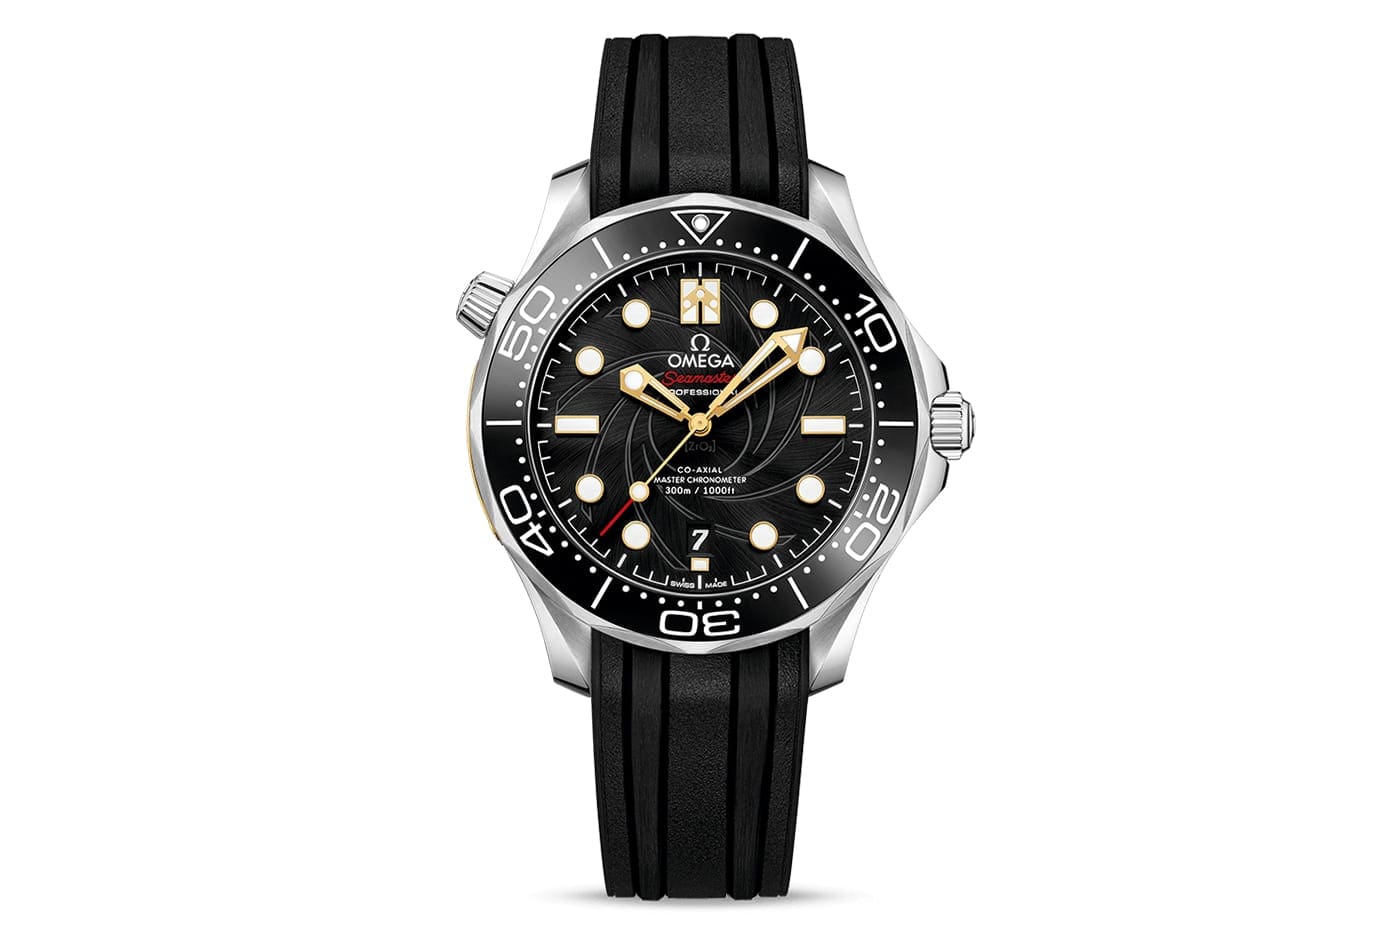 Omega Introduces New “James Bond” Seamaster Watch